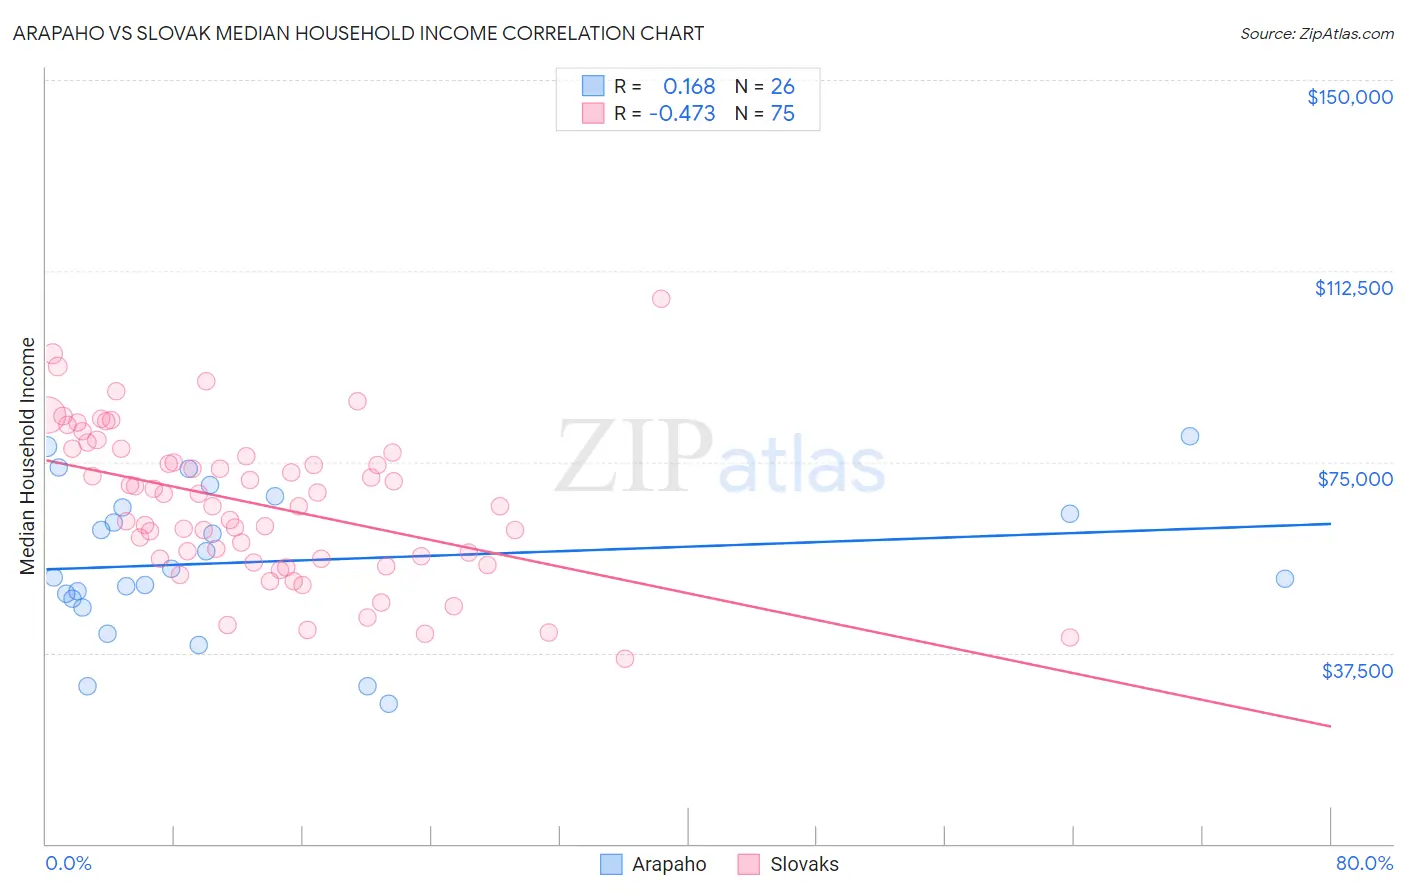 Arapaho vs Slovak Median Household Income